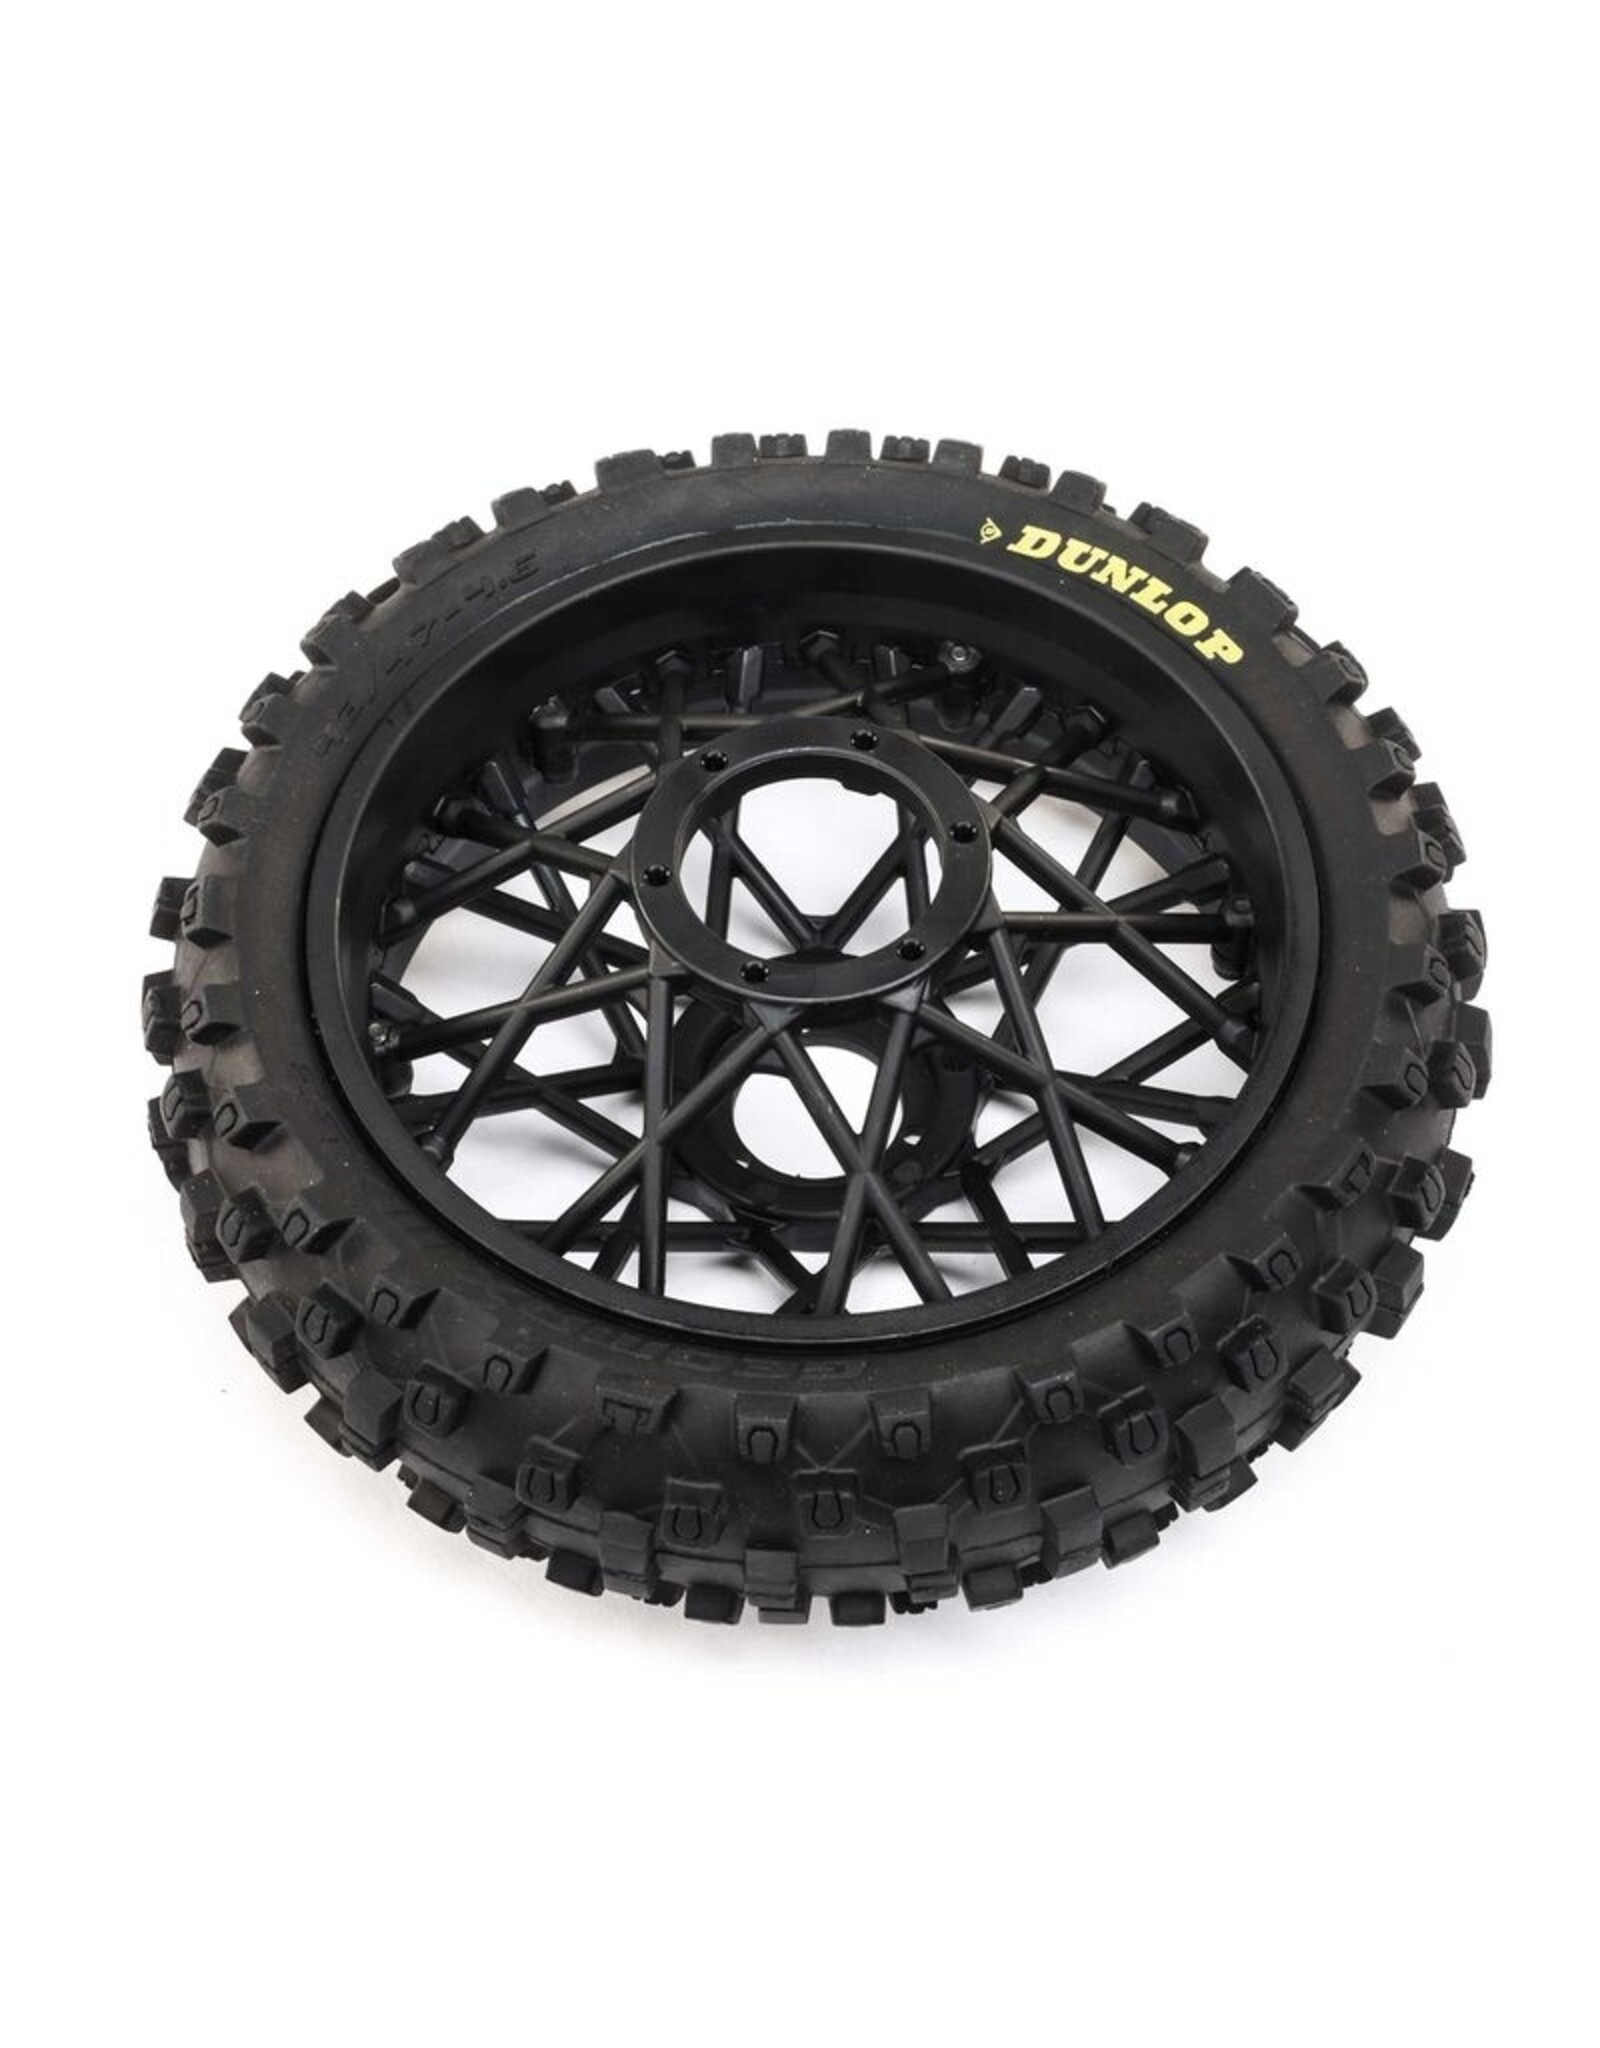 Losi LOS46005 Dunlop MX53 Rear Tire Mounted, Black: PM-MX